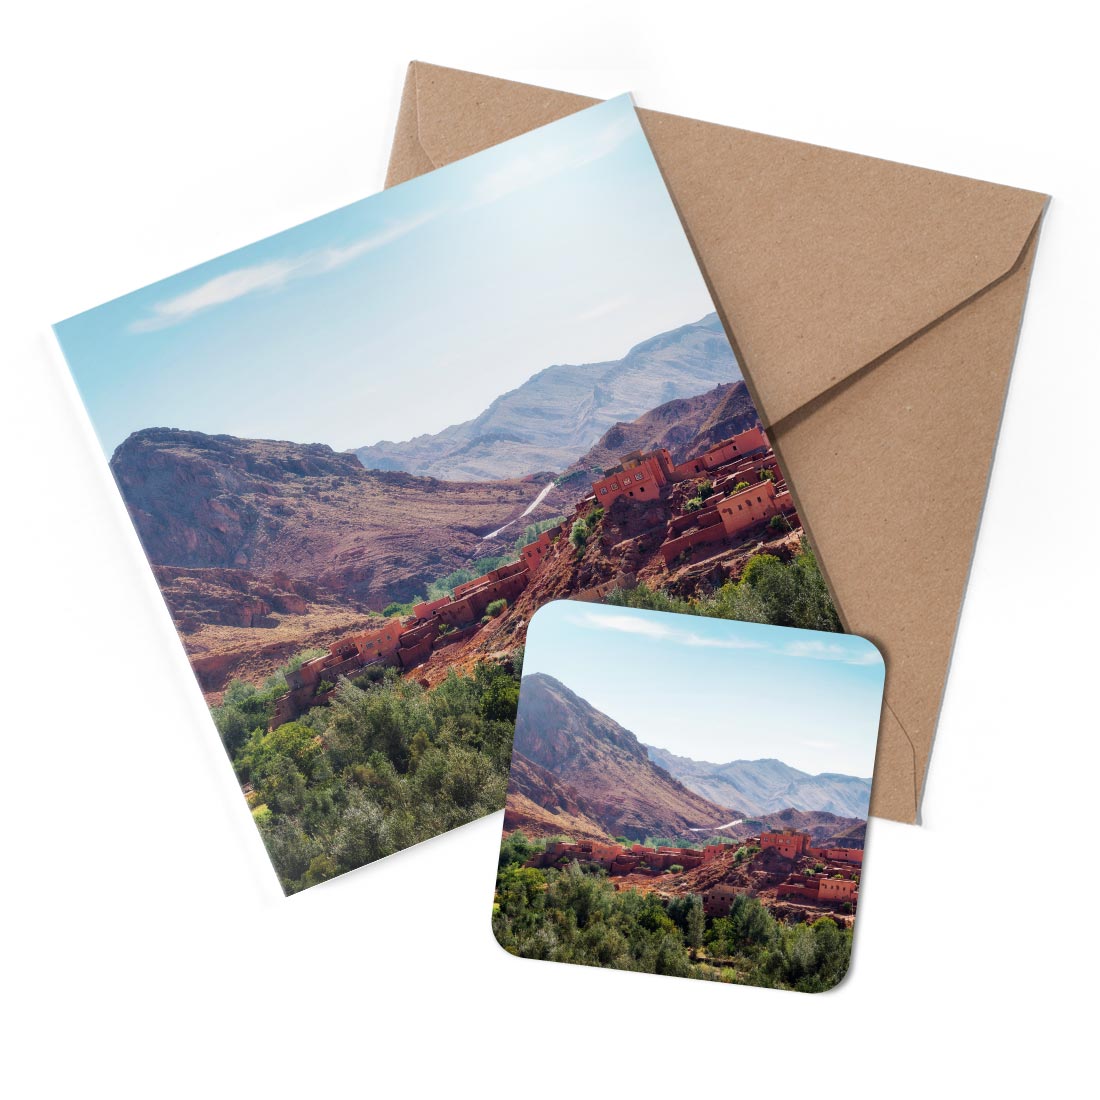 1 x Greeting Card & Coaster Set - Atlas Mountains Morocco #50132